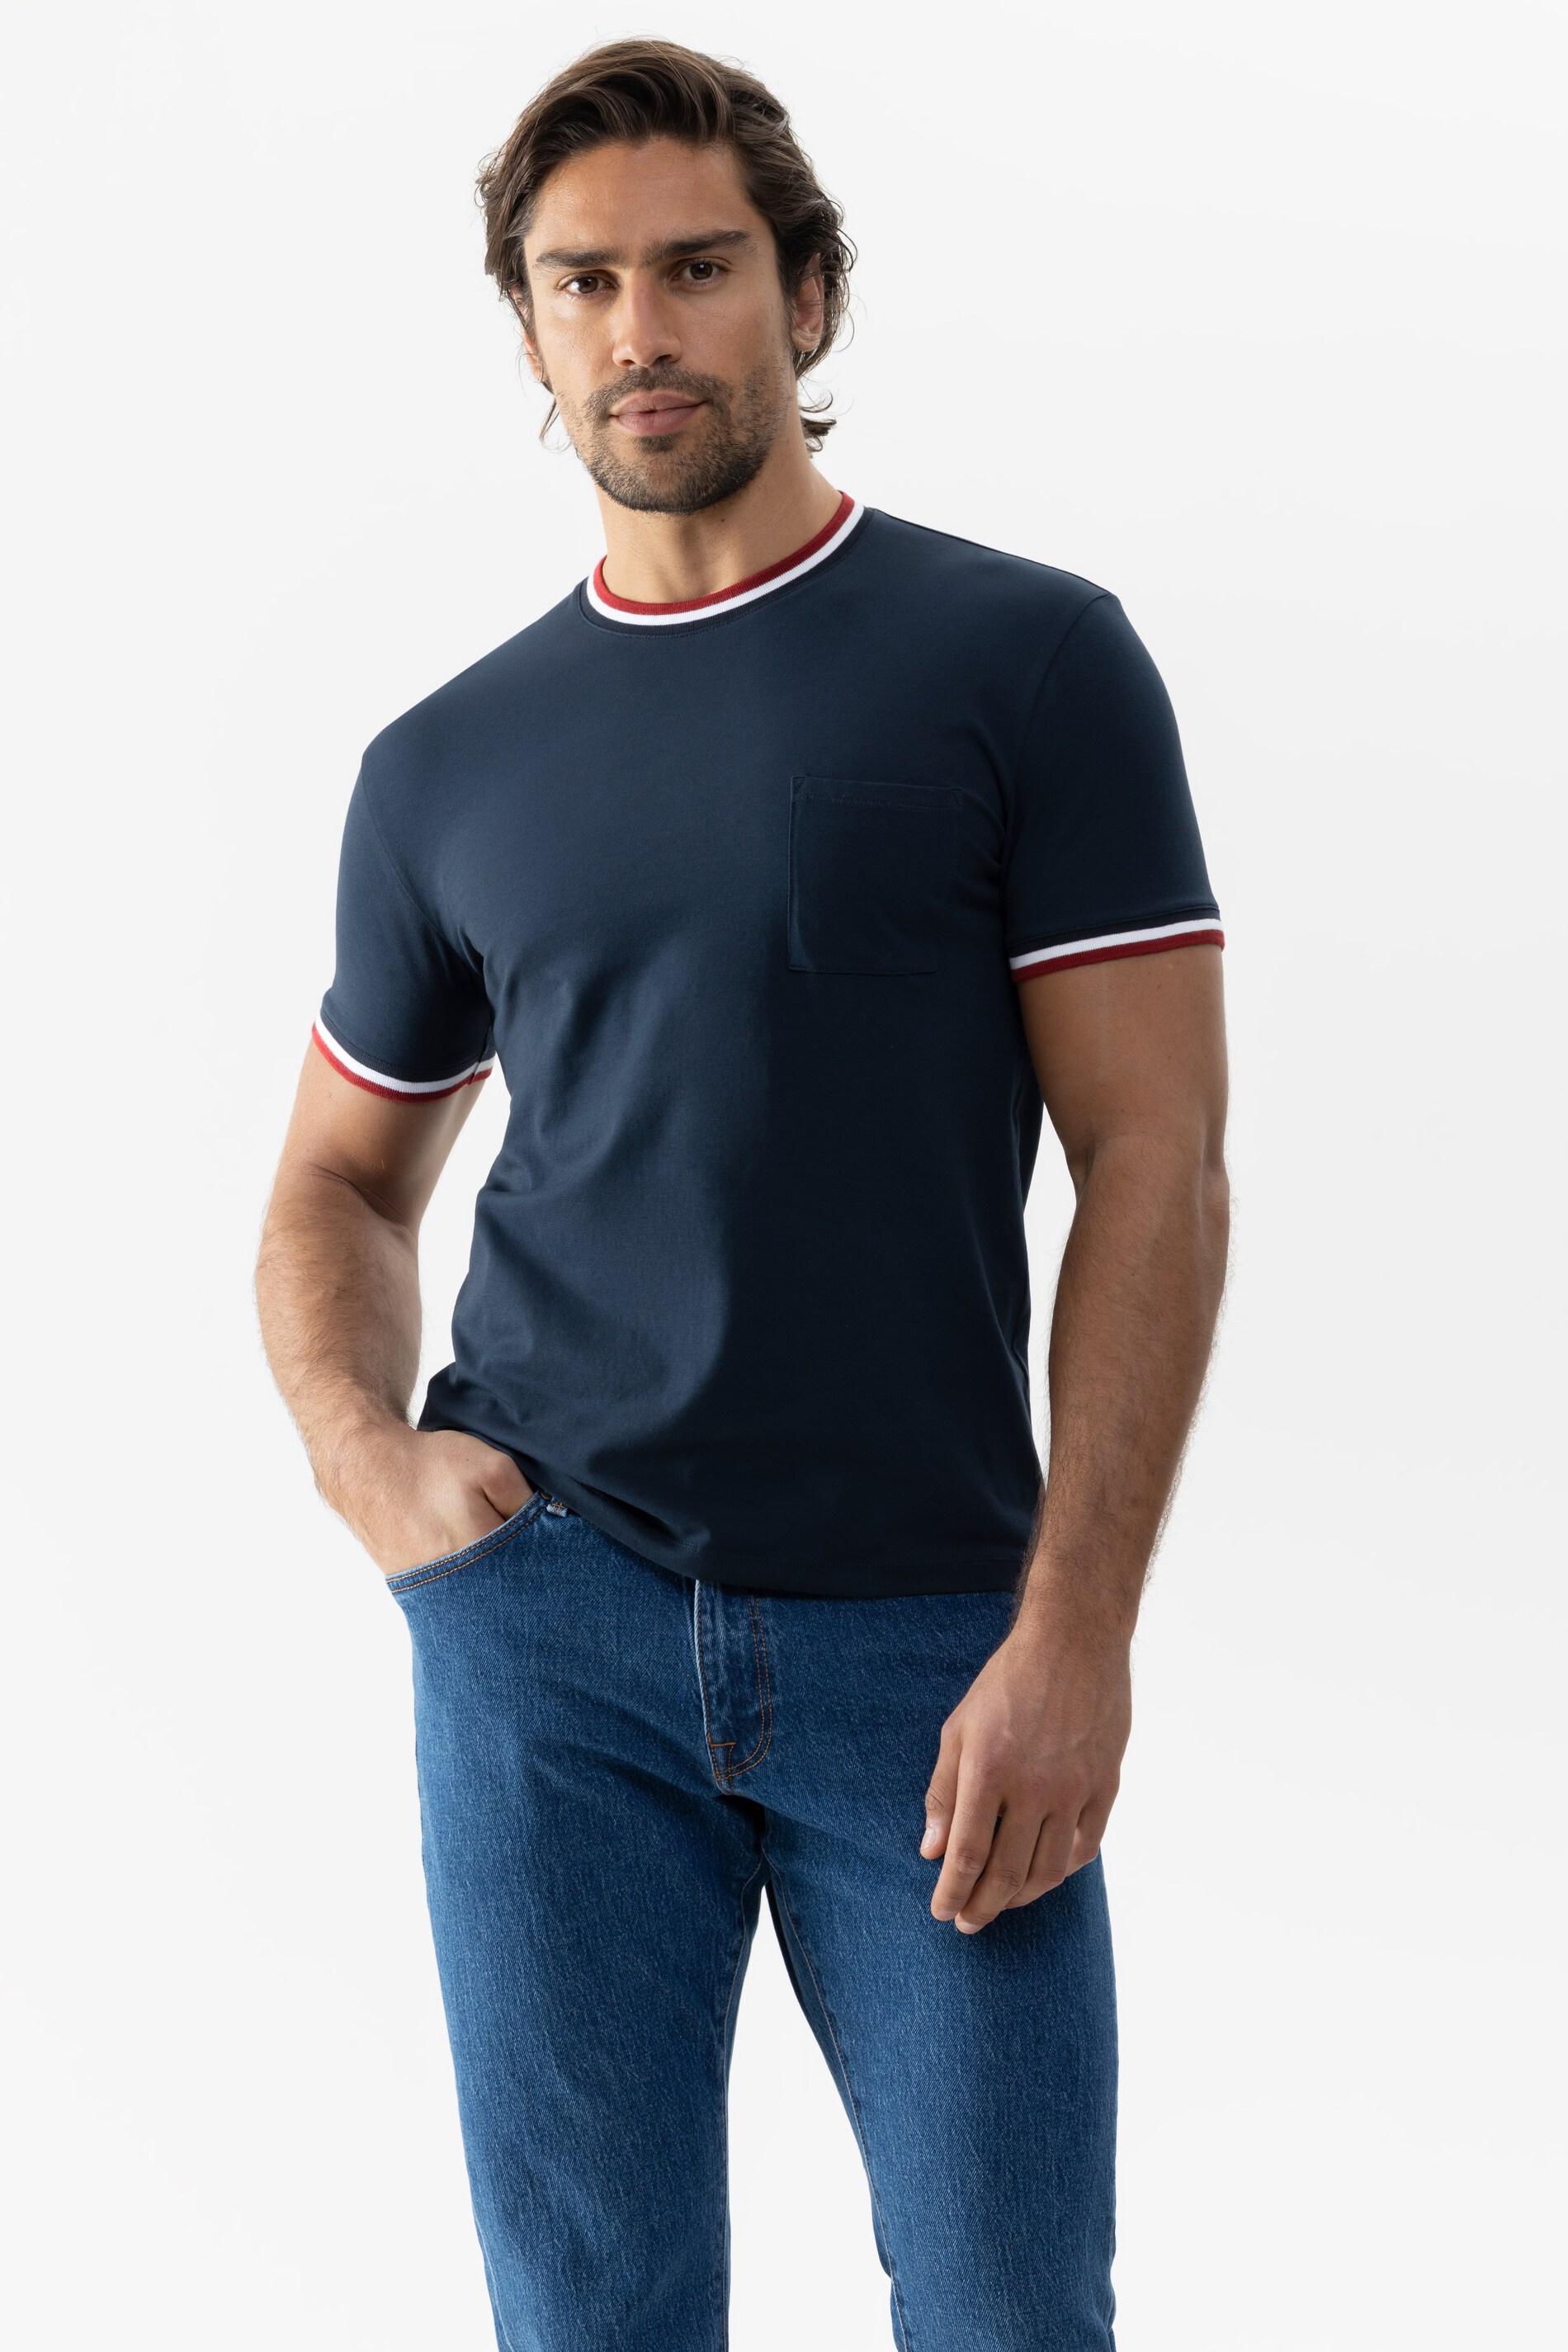 T-Shirt Serie Relax Stripes Frontansicht | mey®